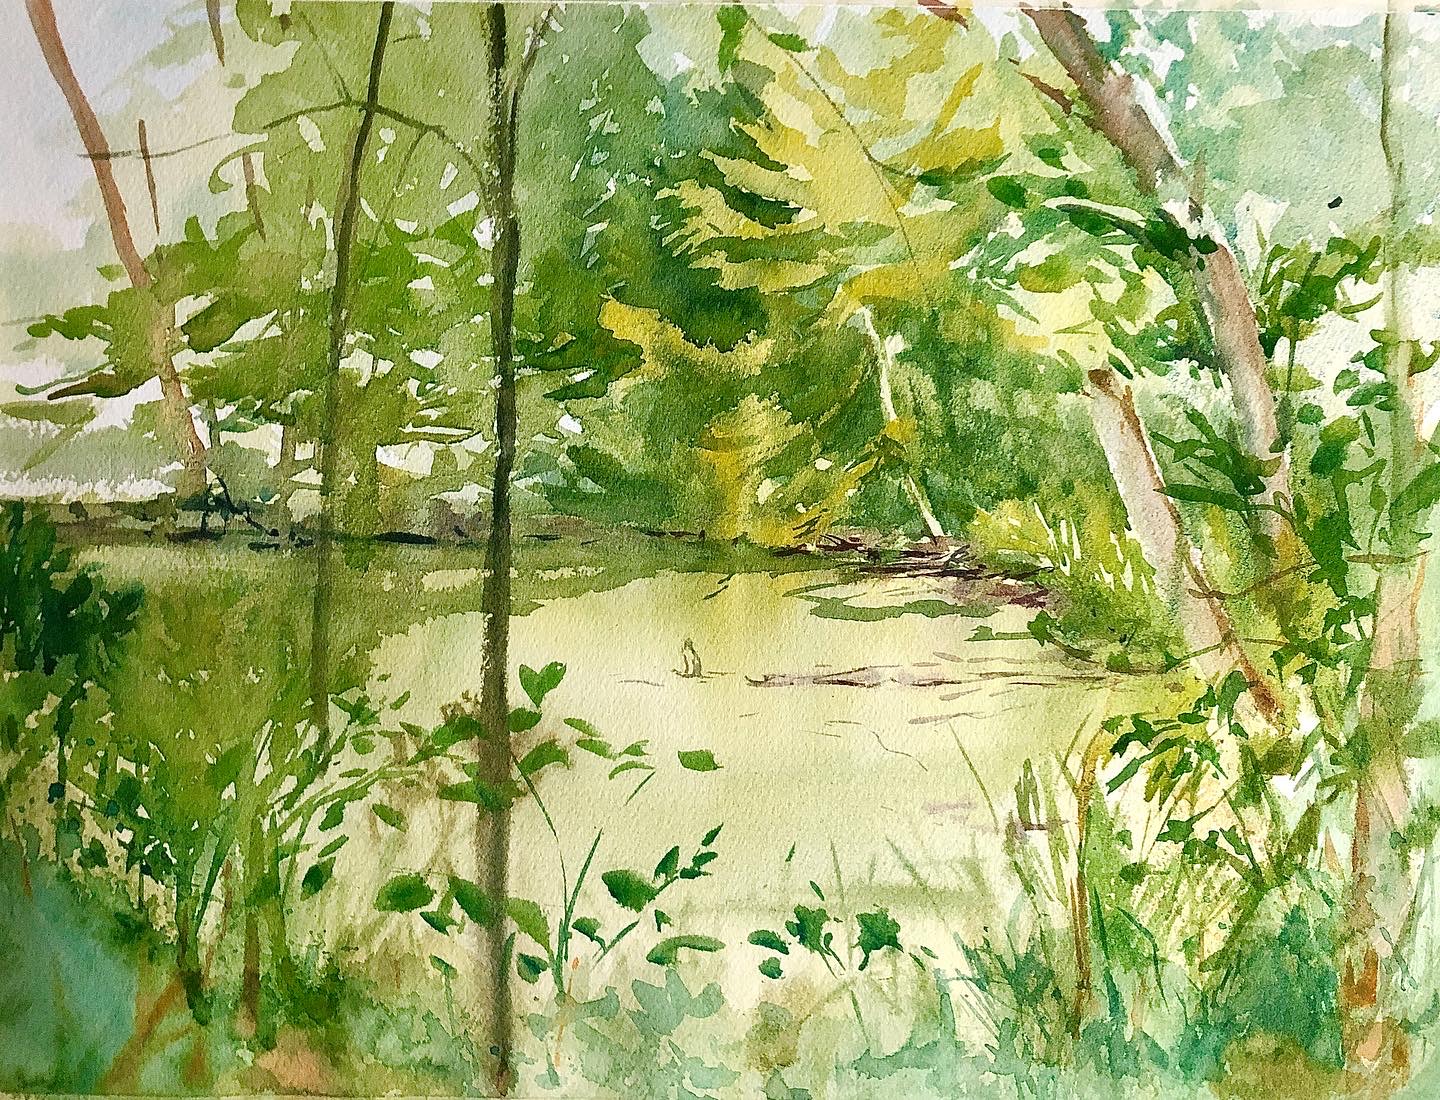 Upper Sangamon River  Allerton
Watercolor
15" X 11"
$225.